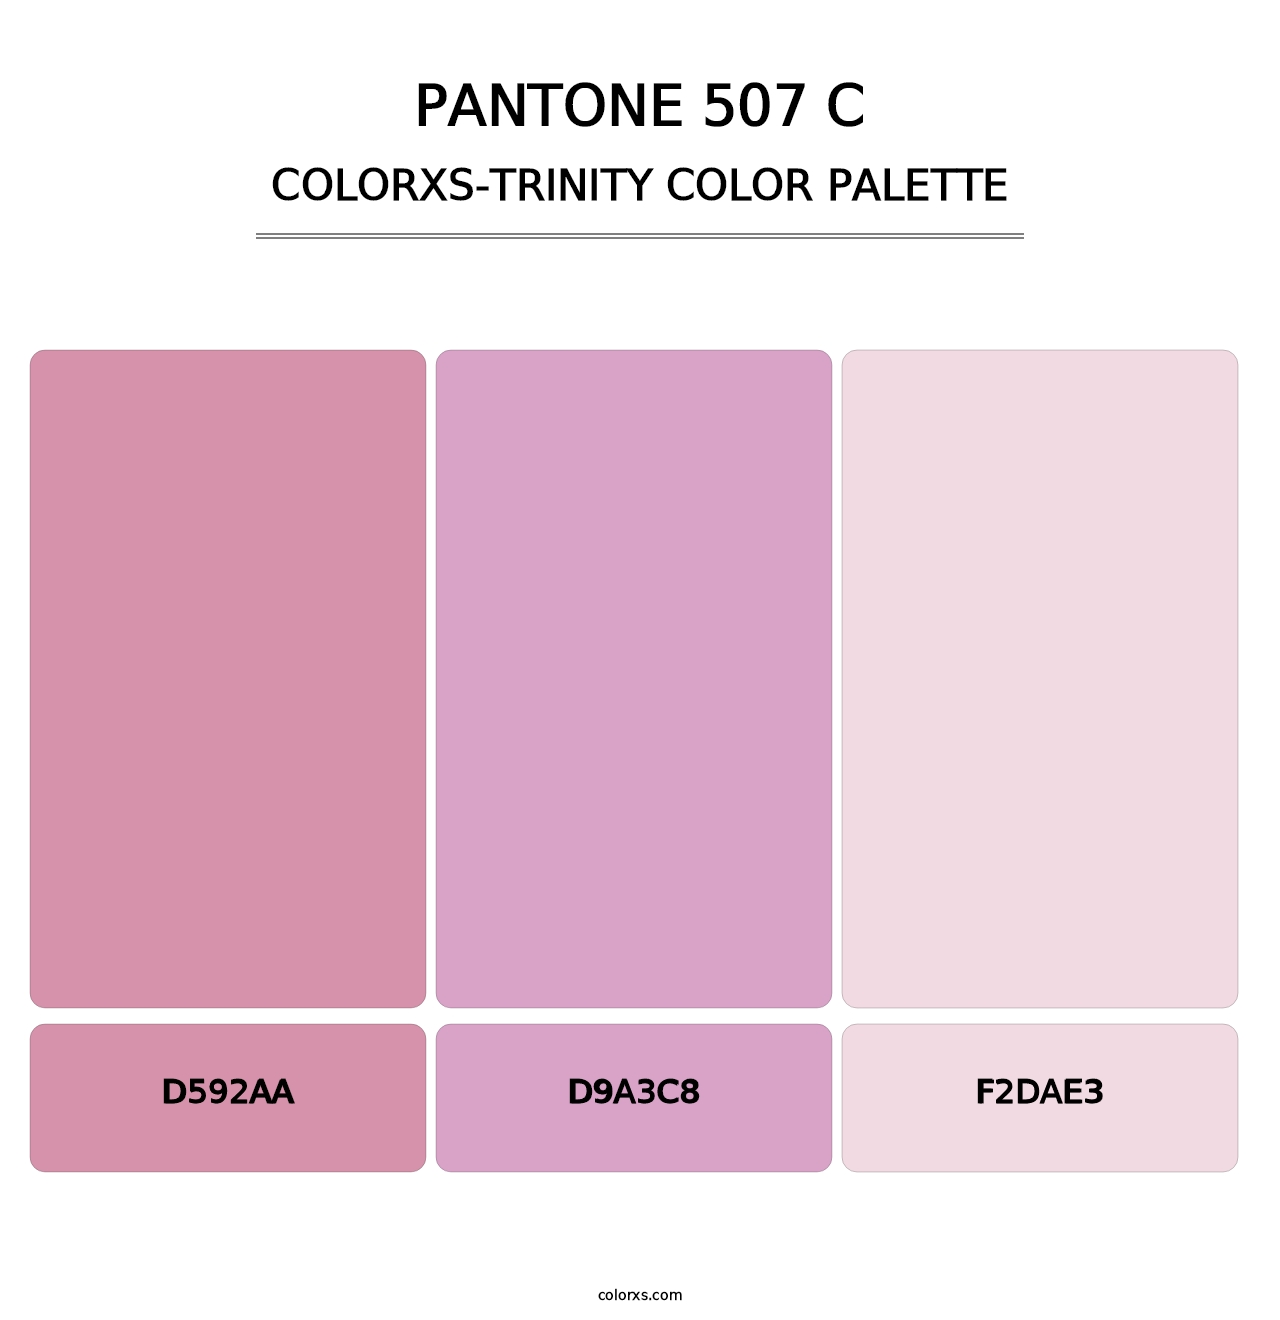 PANTONE 507 C - Colorxs Trinity Palette